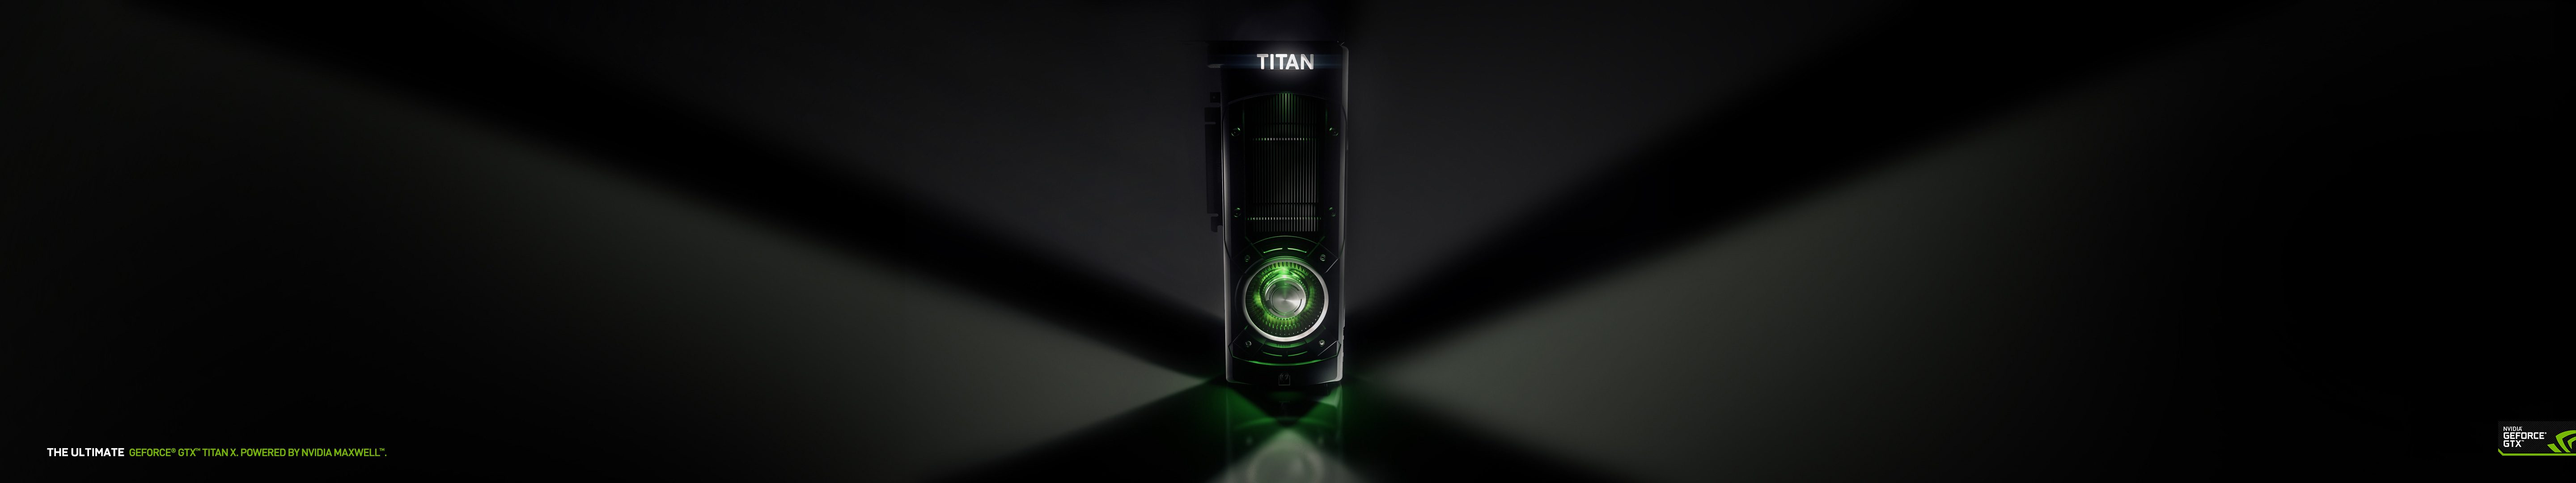 Geforce Gtx Titan X The Ultimate Wallpaper Demos